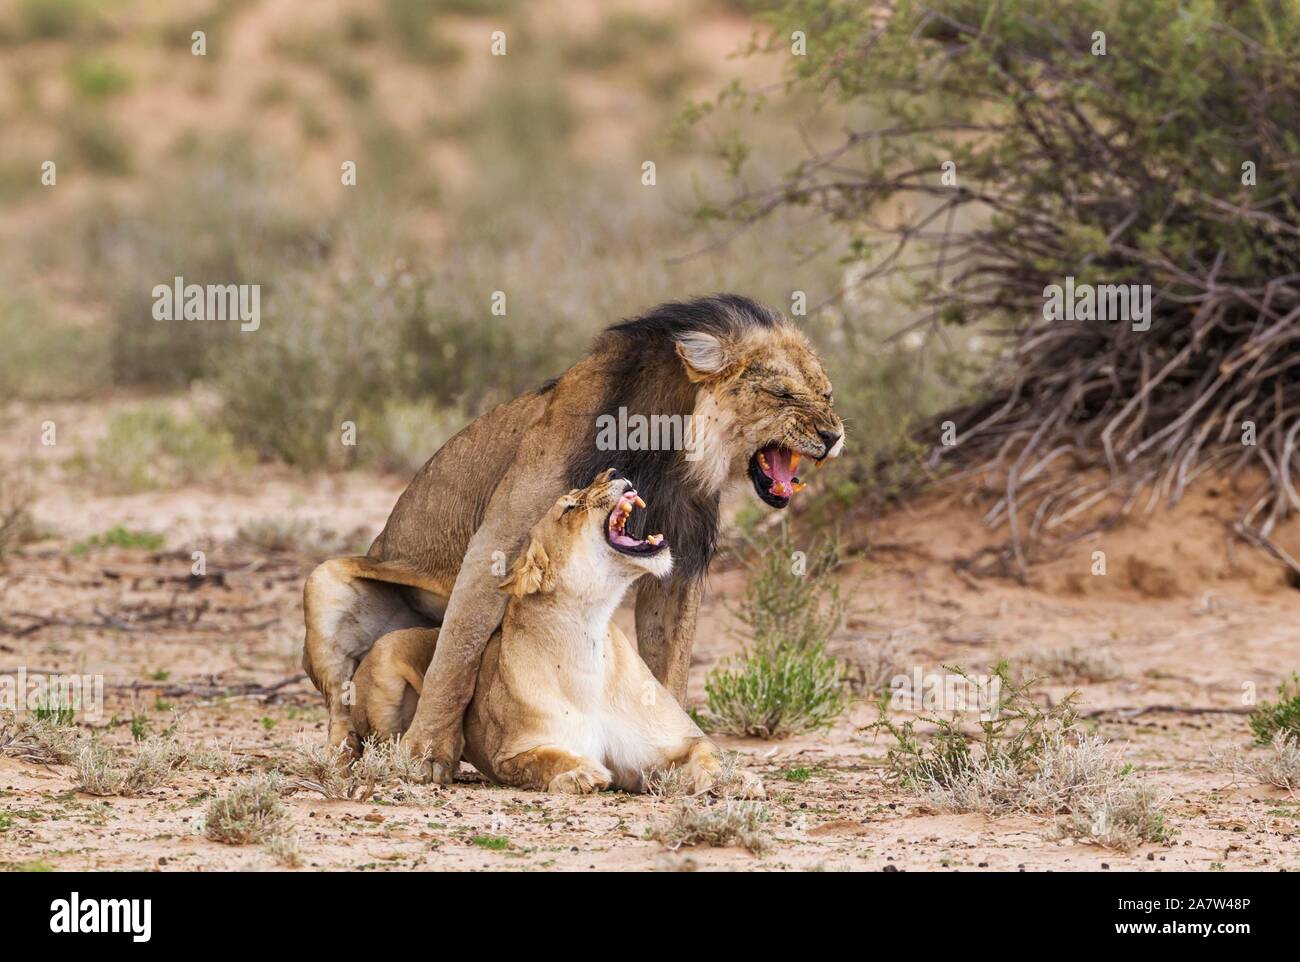 Negro-aguarï vernayi leones (Panthera leo), bastante viejo par animal el apareamiento, el desierto de Kalahari, el Parque Transfronterizo Kgalagadi, Sudáfrica Foto de stock